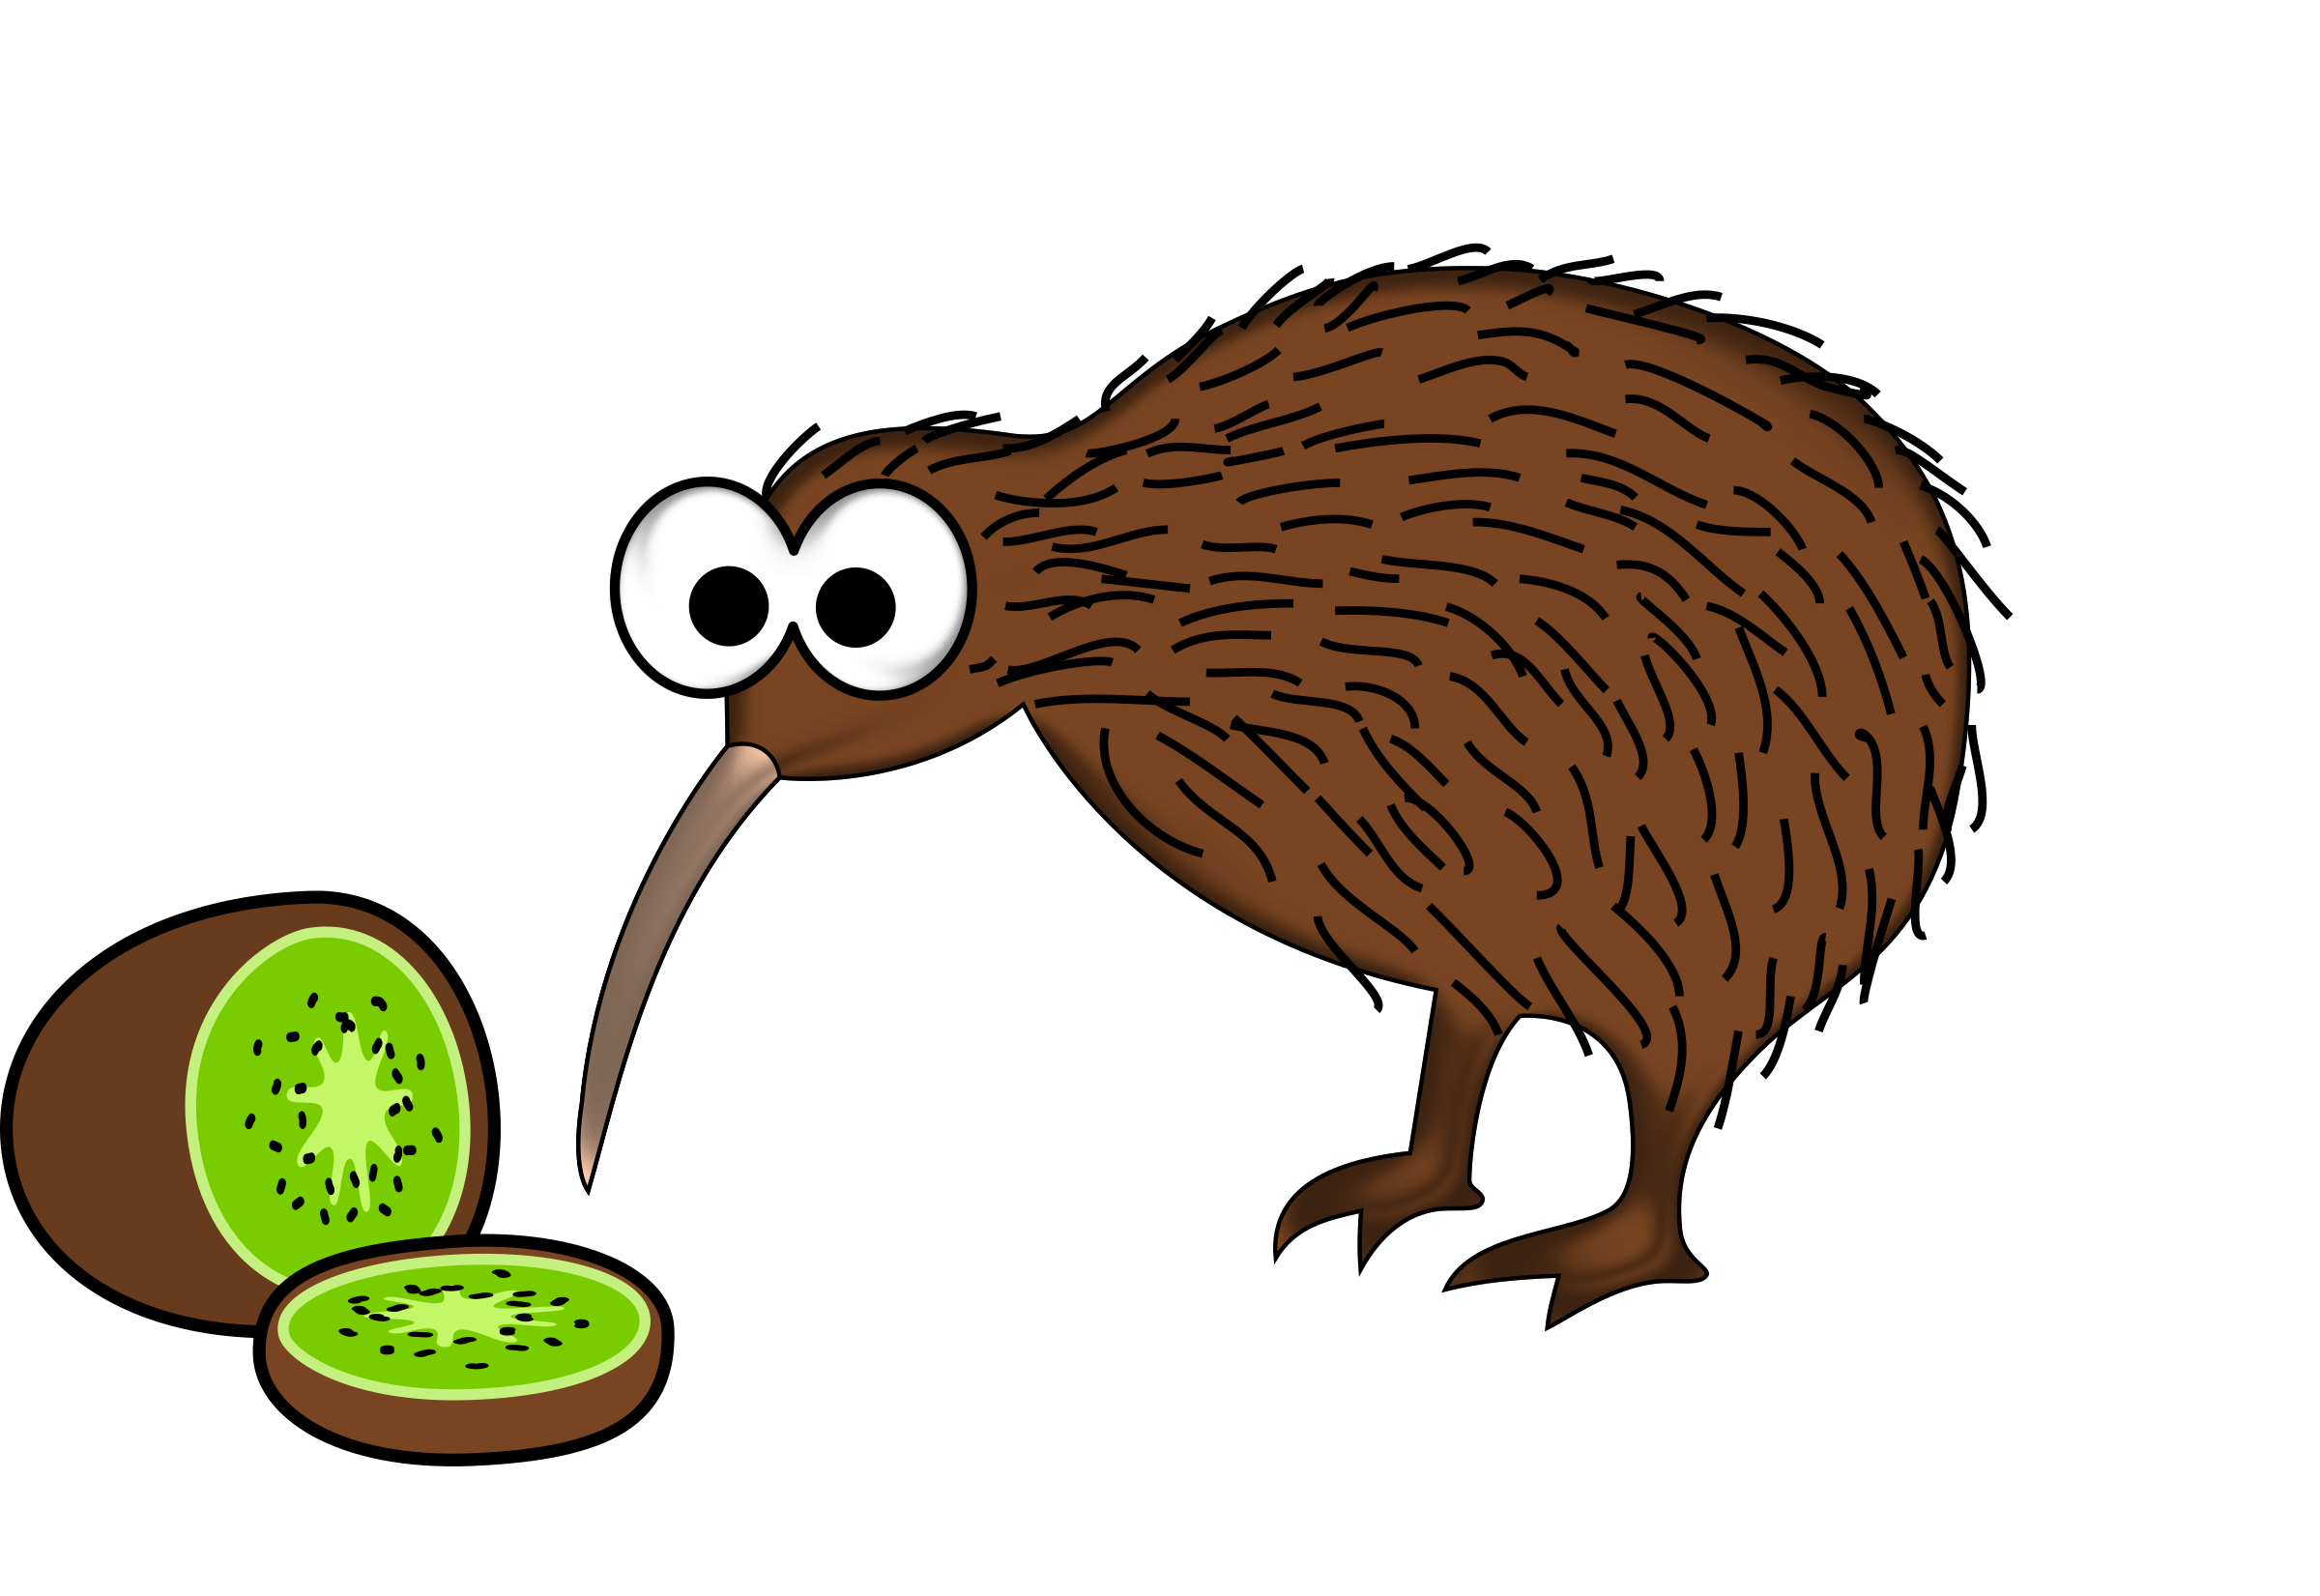 Kiwi clipart bird nz, Kiwi bird nz Transparent FREE for download